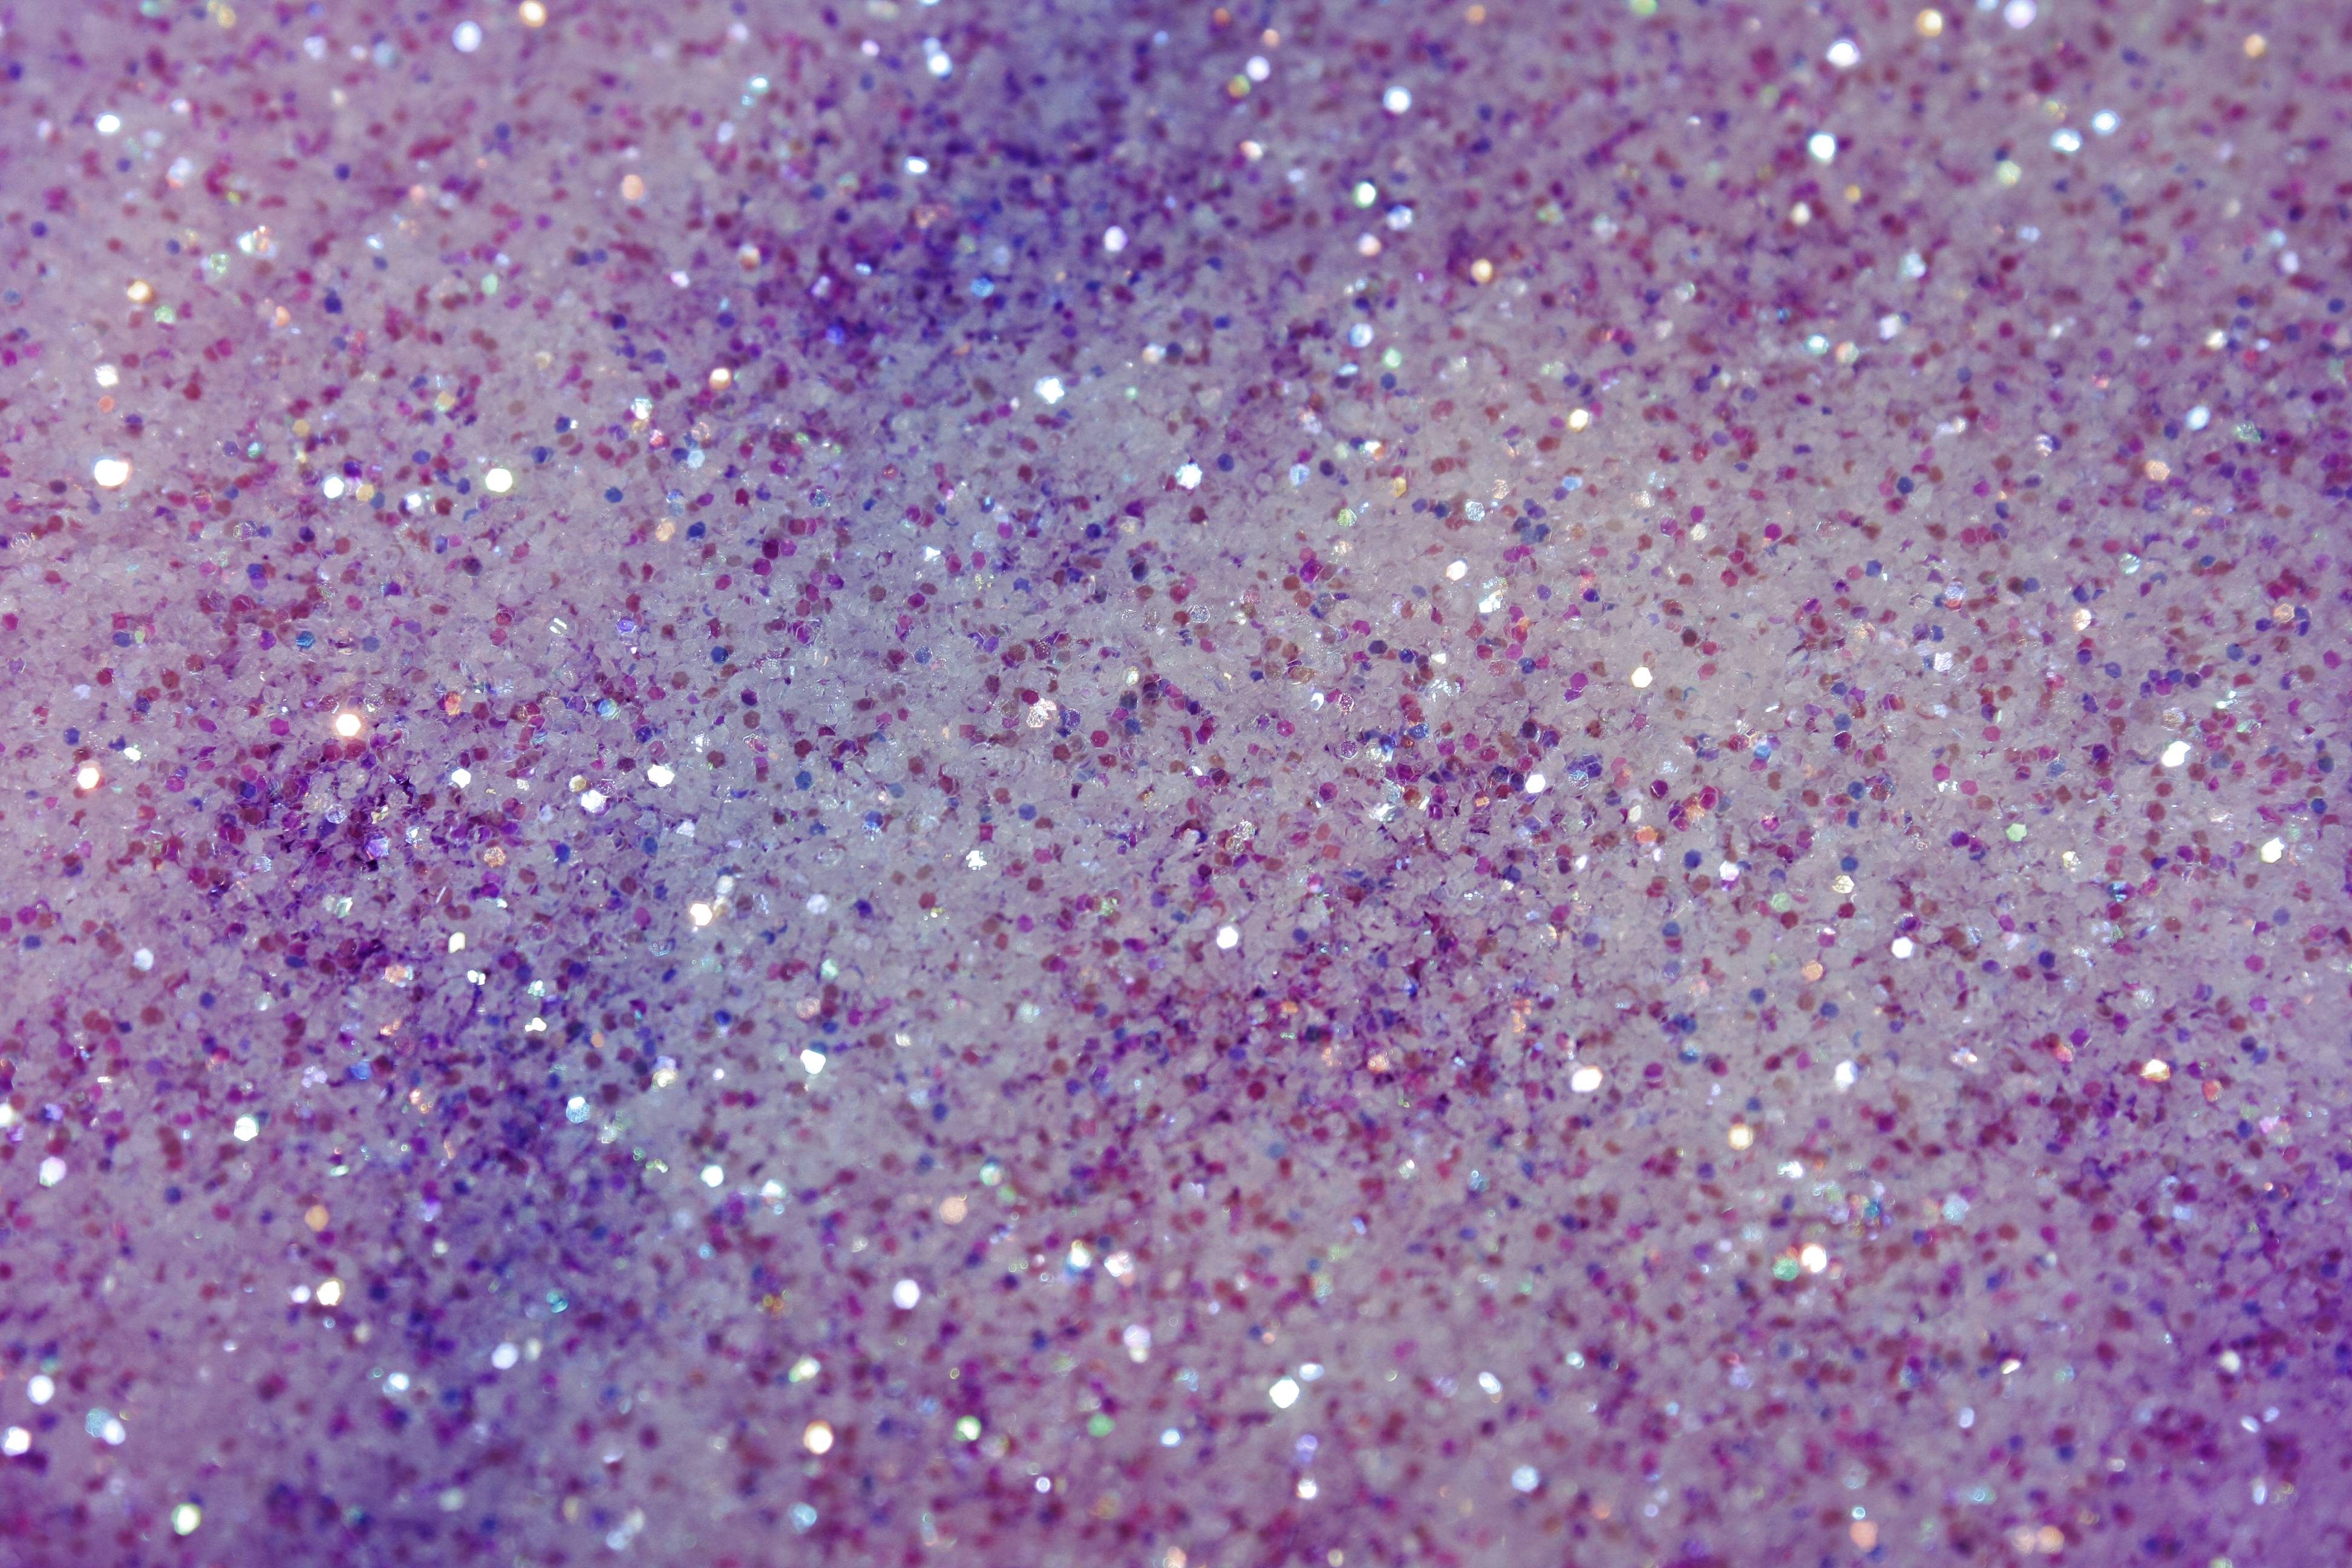 Glittery Light Purple 310279 Image HD Wallpaper. Wallfoy.com